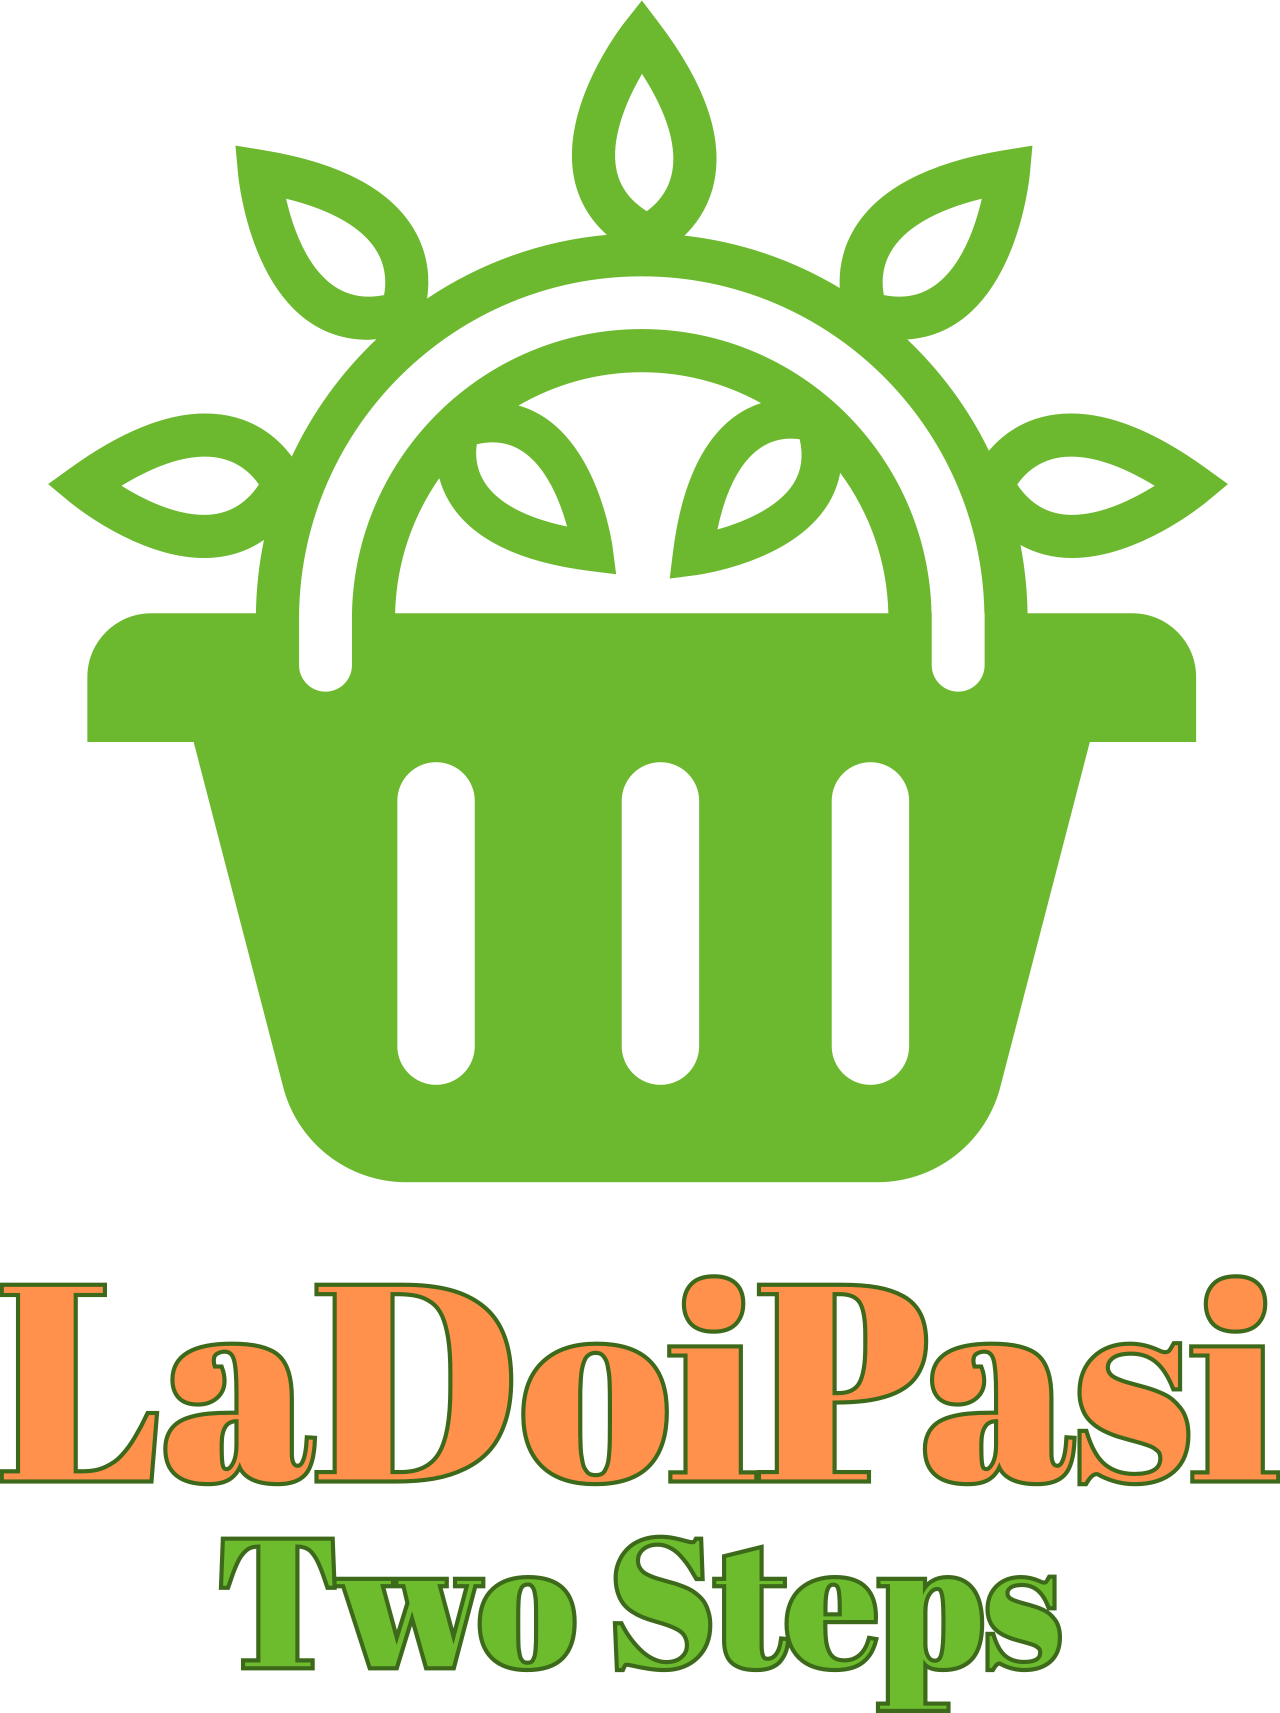 LaDoiPasi's web page